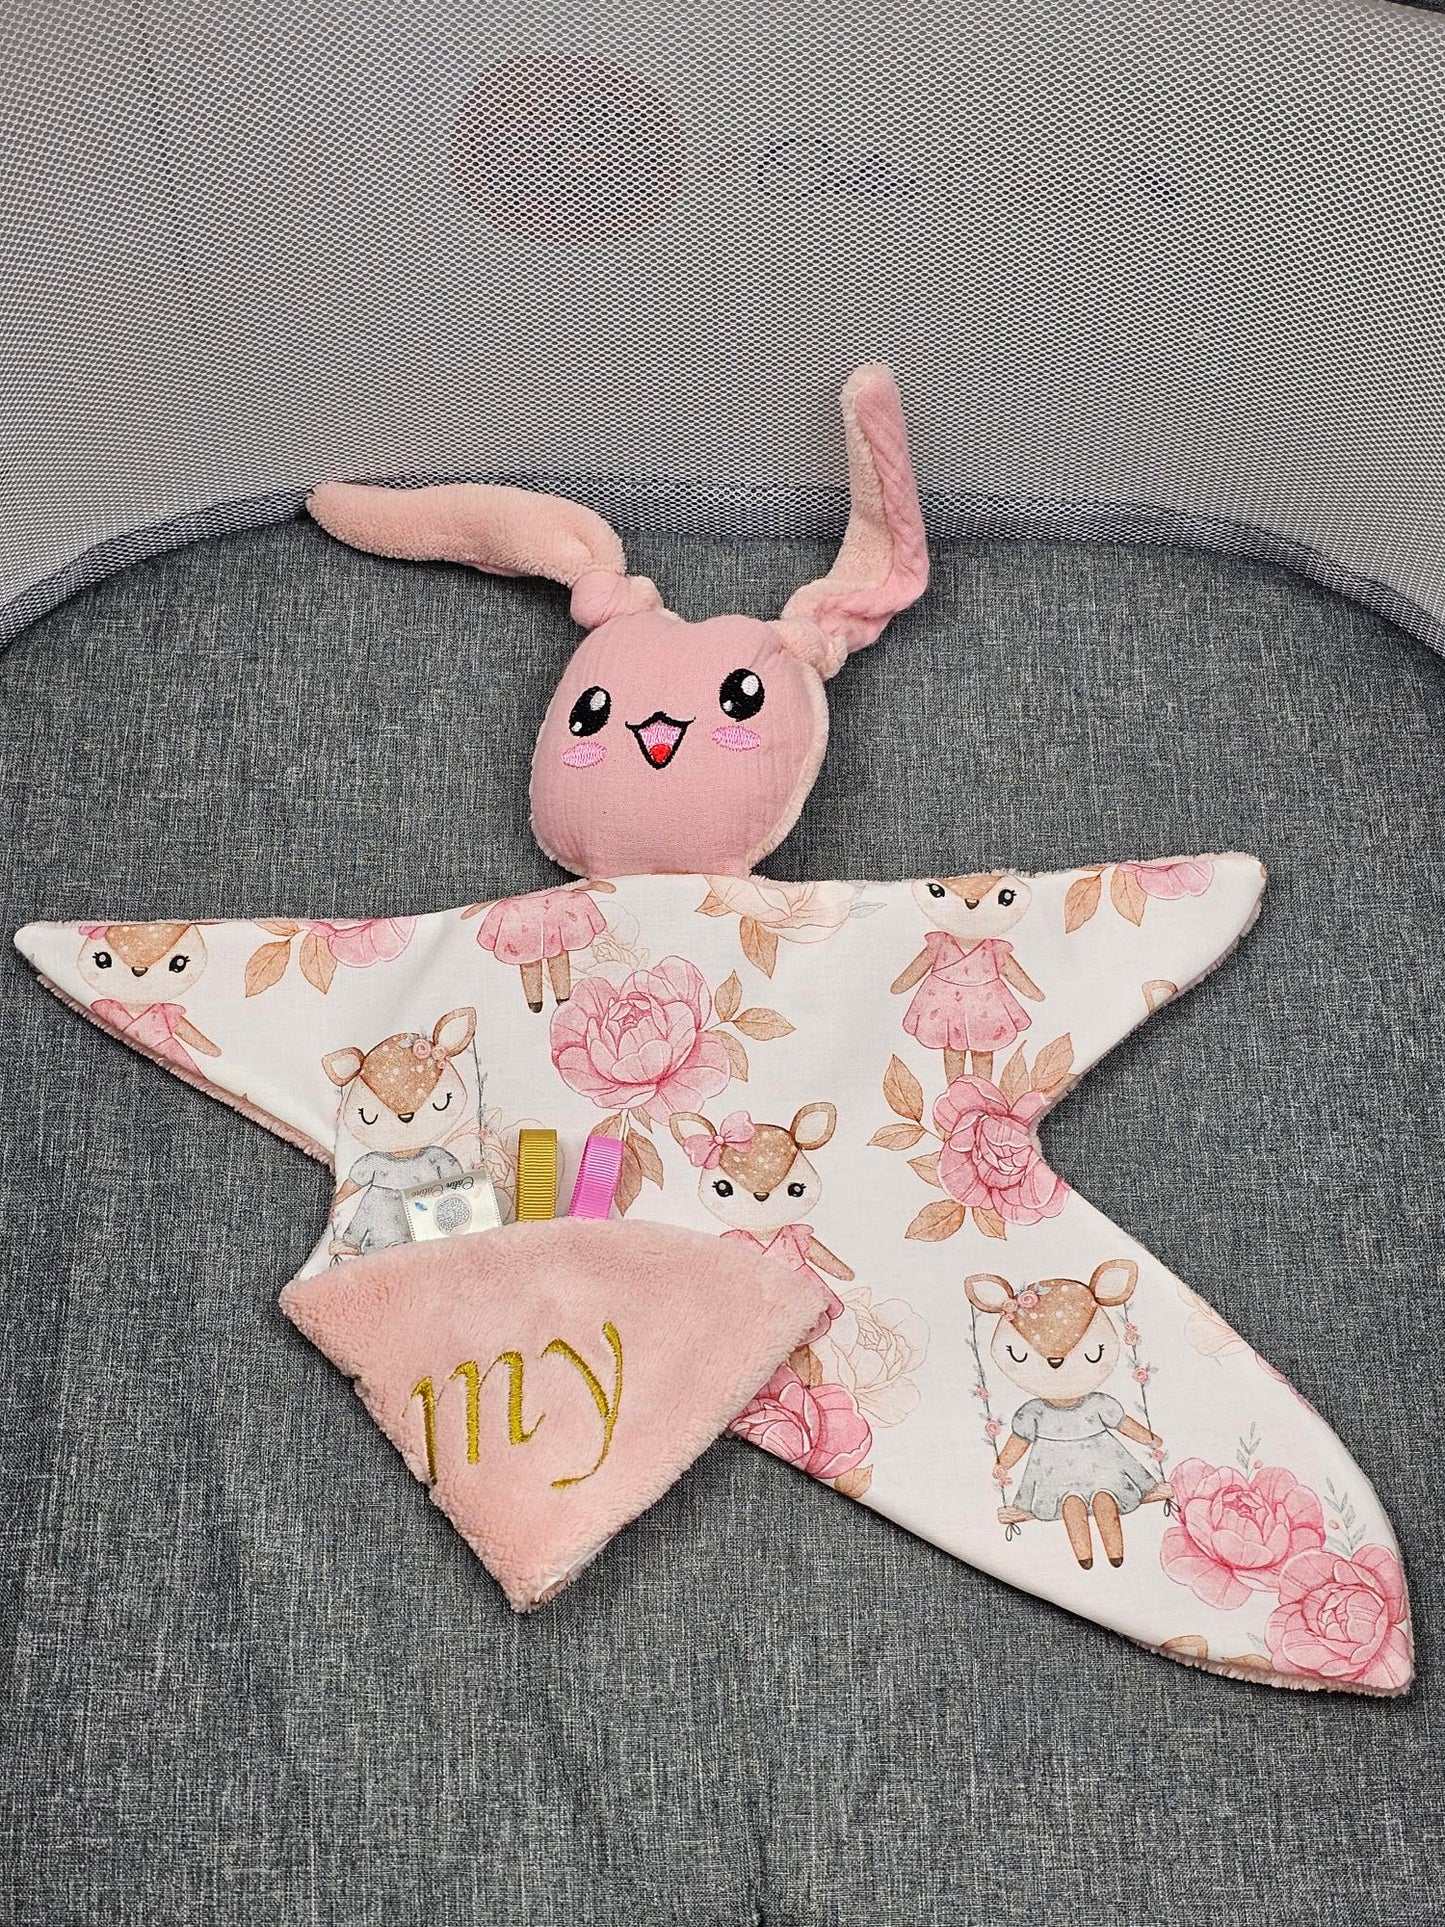 Girl's Personalized Comforter - Rabbit